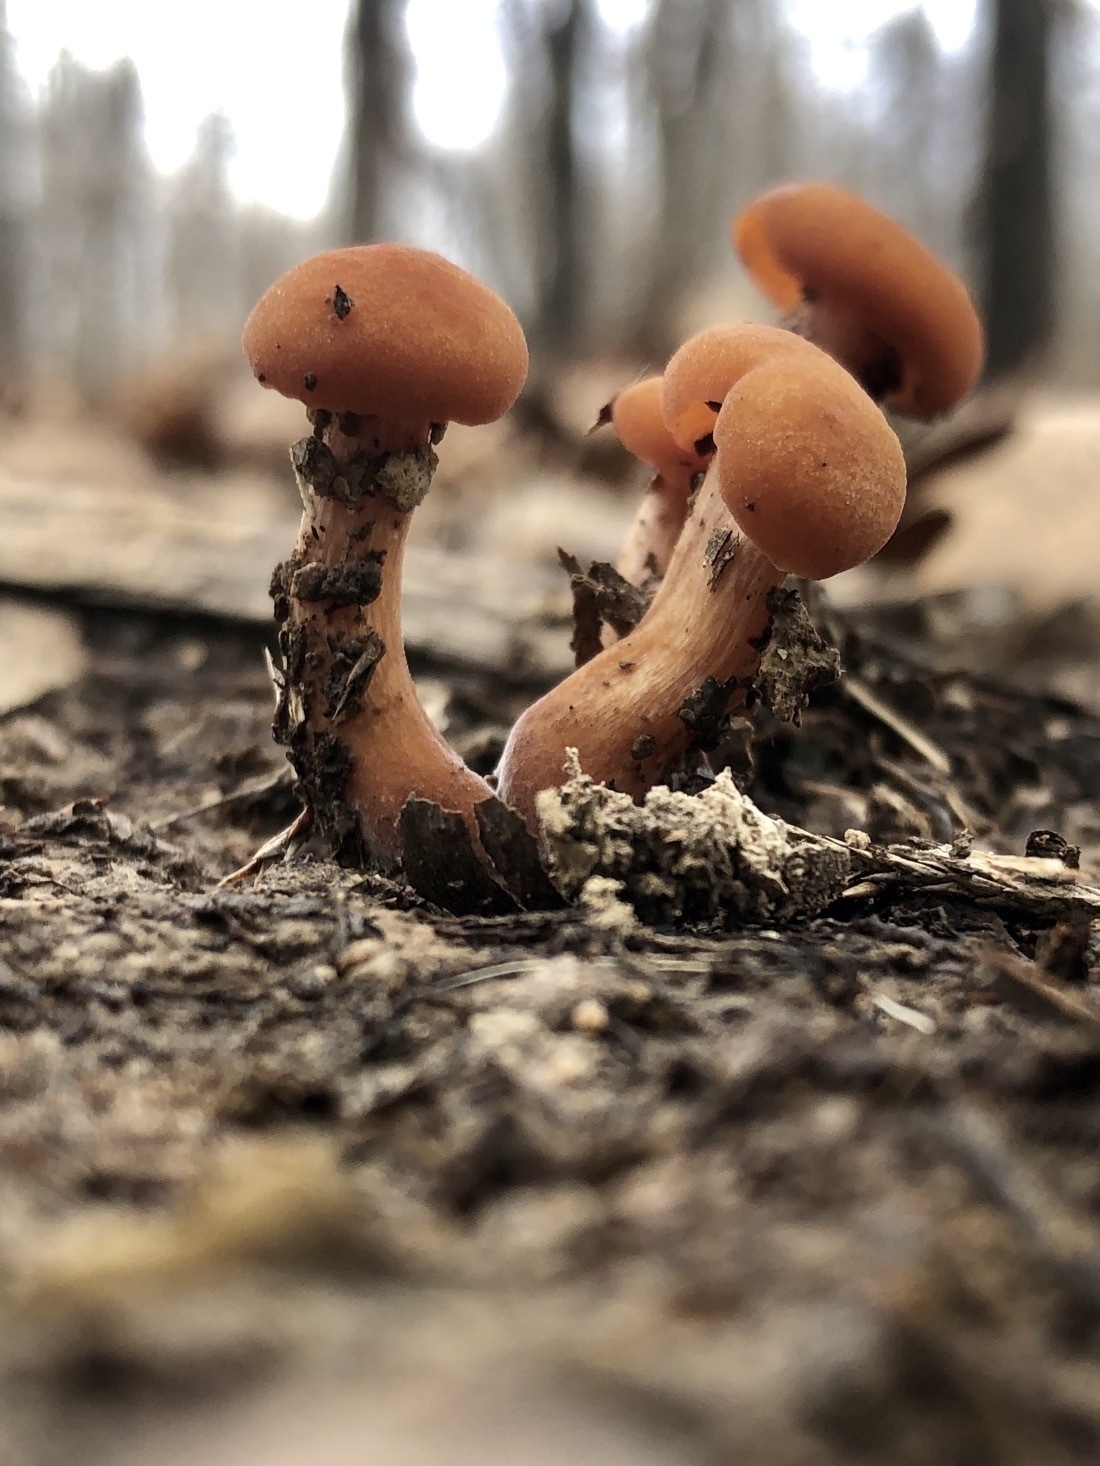 A cluster of dark orange mushrooms growing out of soil,